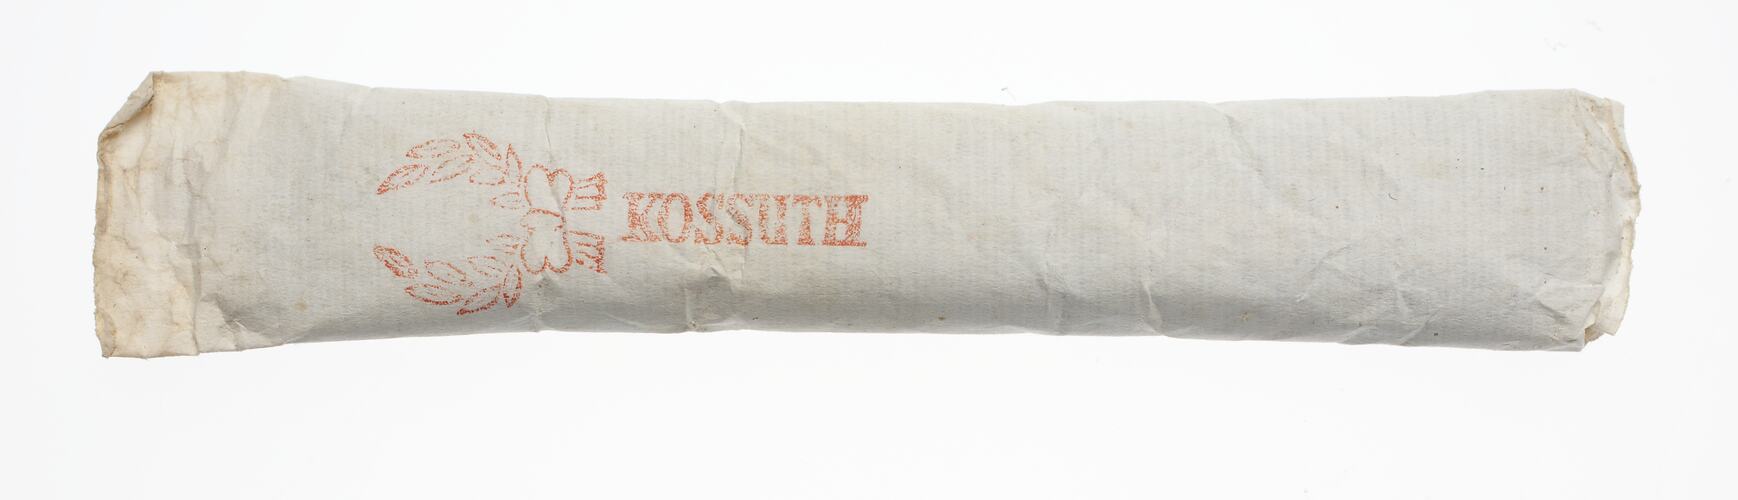 Kossuth brand cigarette.